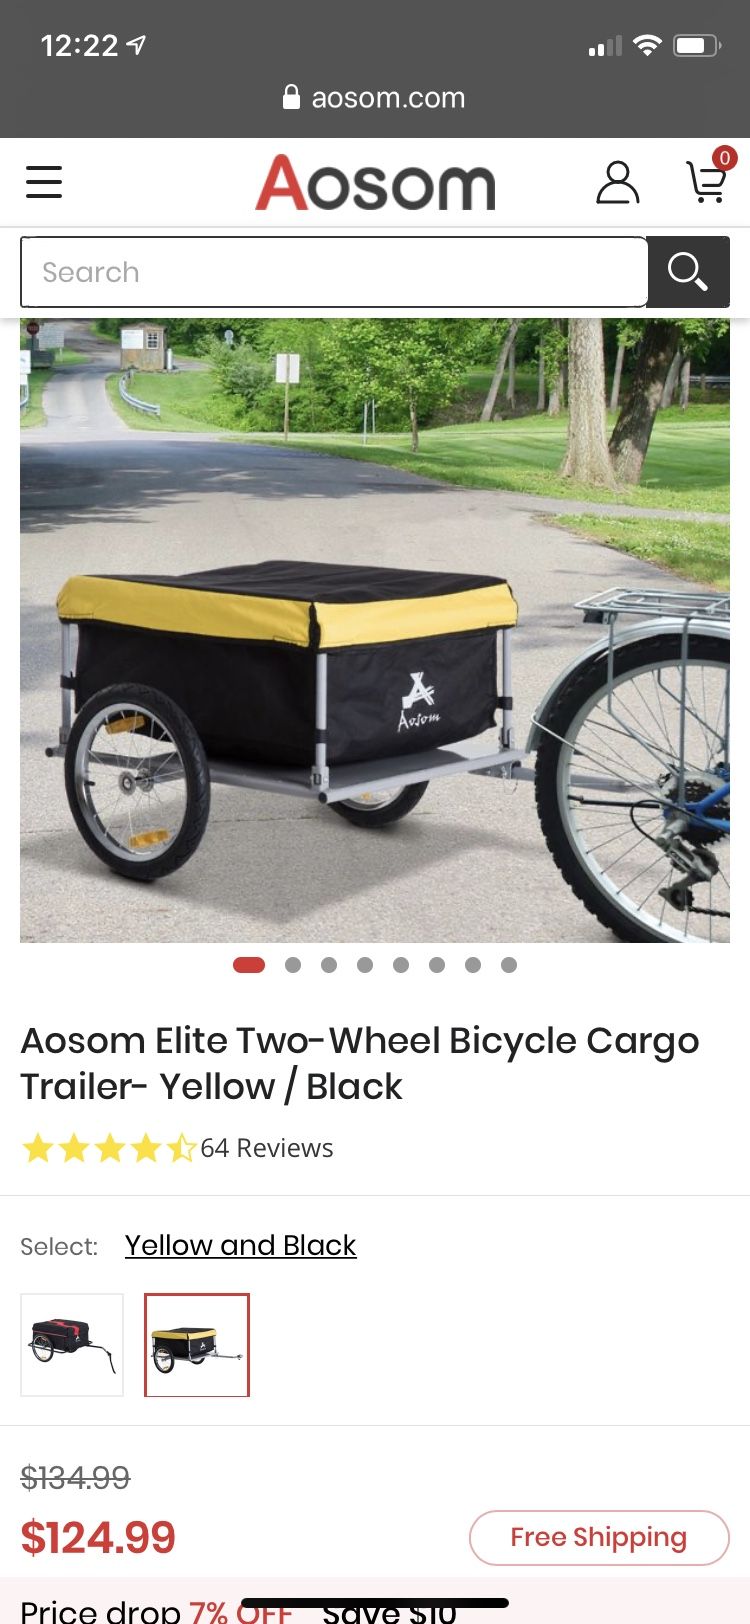 Cargo bike trailer new in box $90